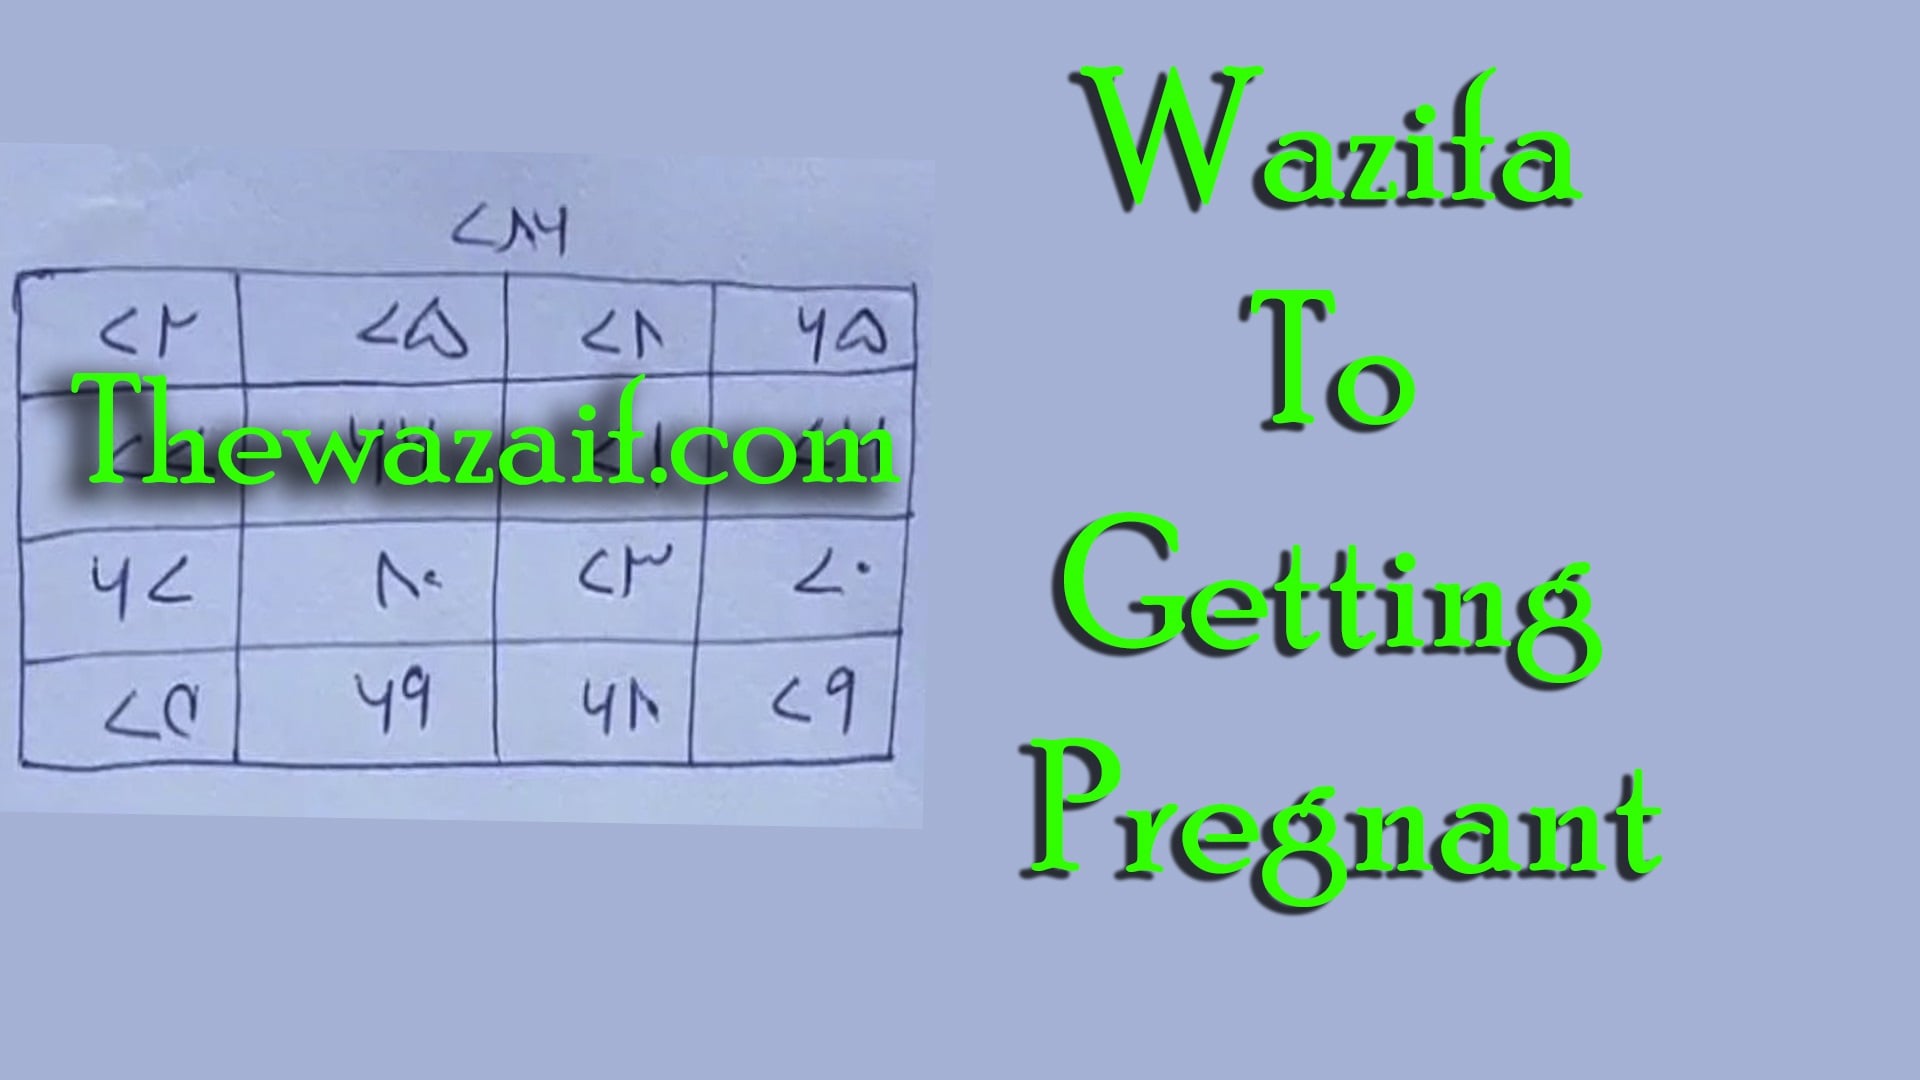 Fast Wazifa To Getting Pregnant